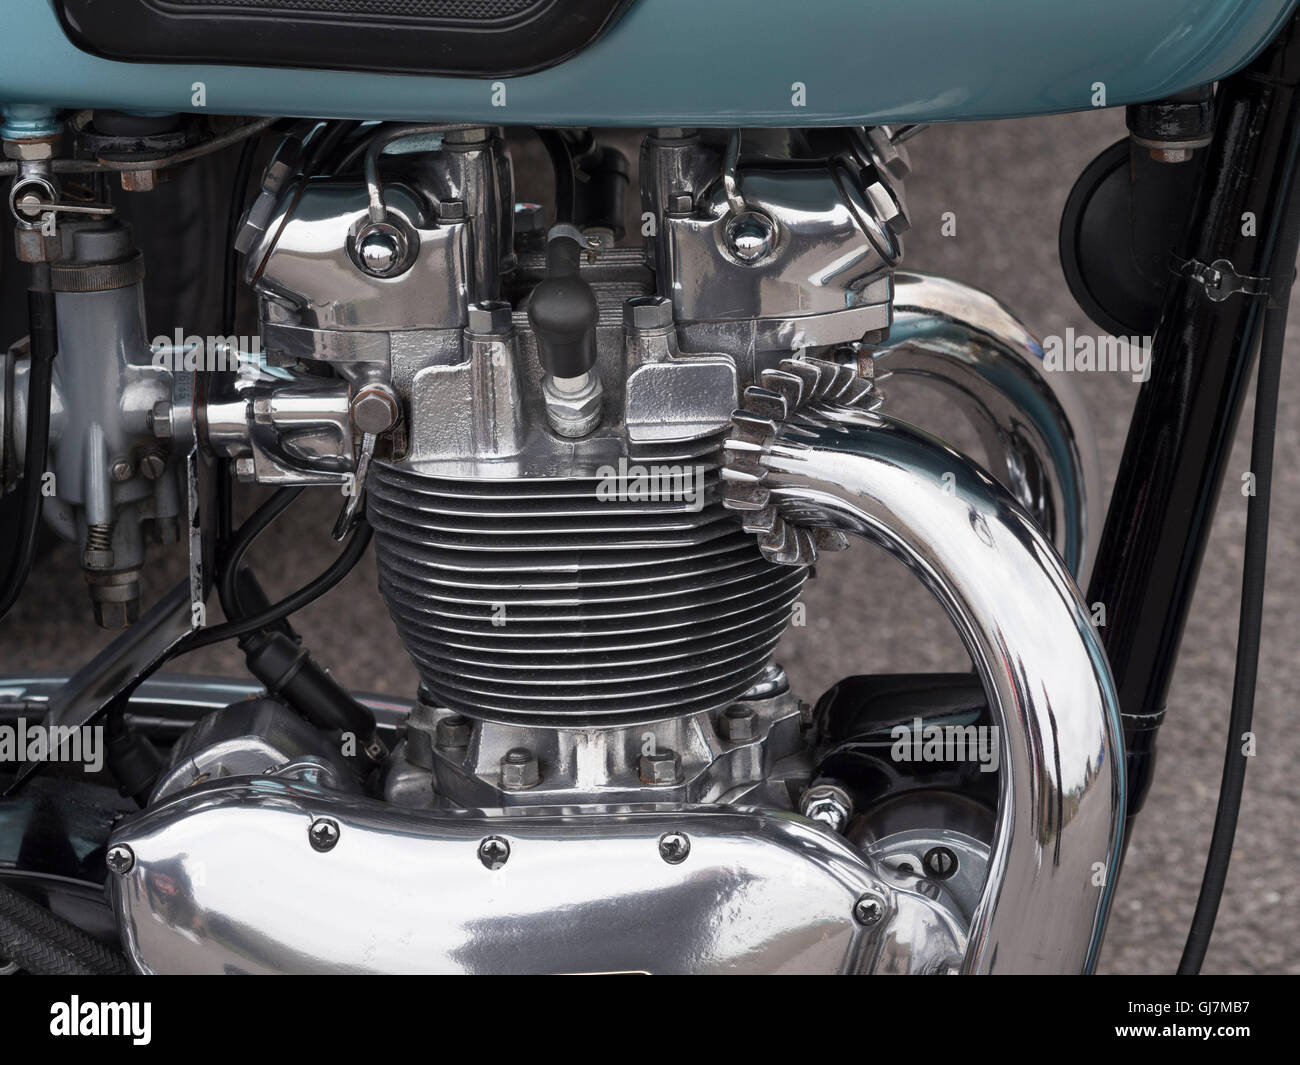 Triumph Bonneville motor cycle cylinder block, circa 1961 Stock Photo